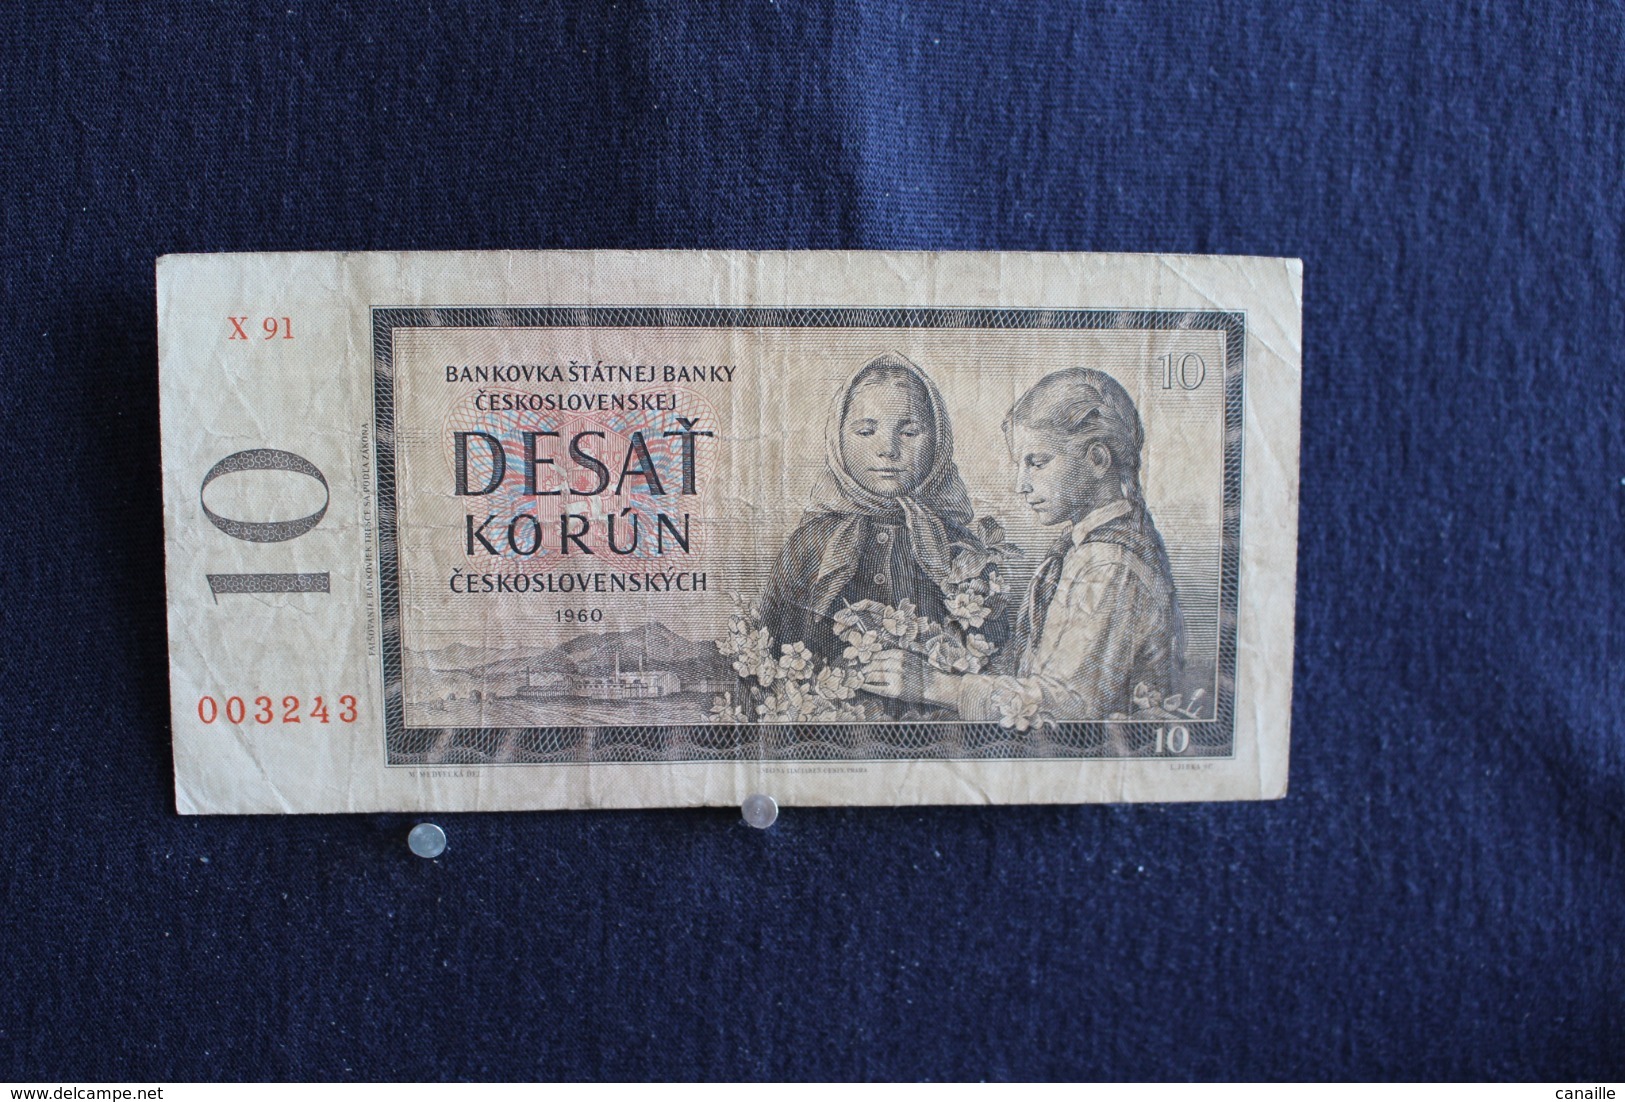 74 /  Tchécoslovaquie -  Kronen 10 Couronnes - Desat Korun   - Ceskoslovenskych  - 1960 - /  N° 003243 - Czechoslovakia